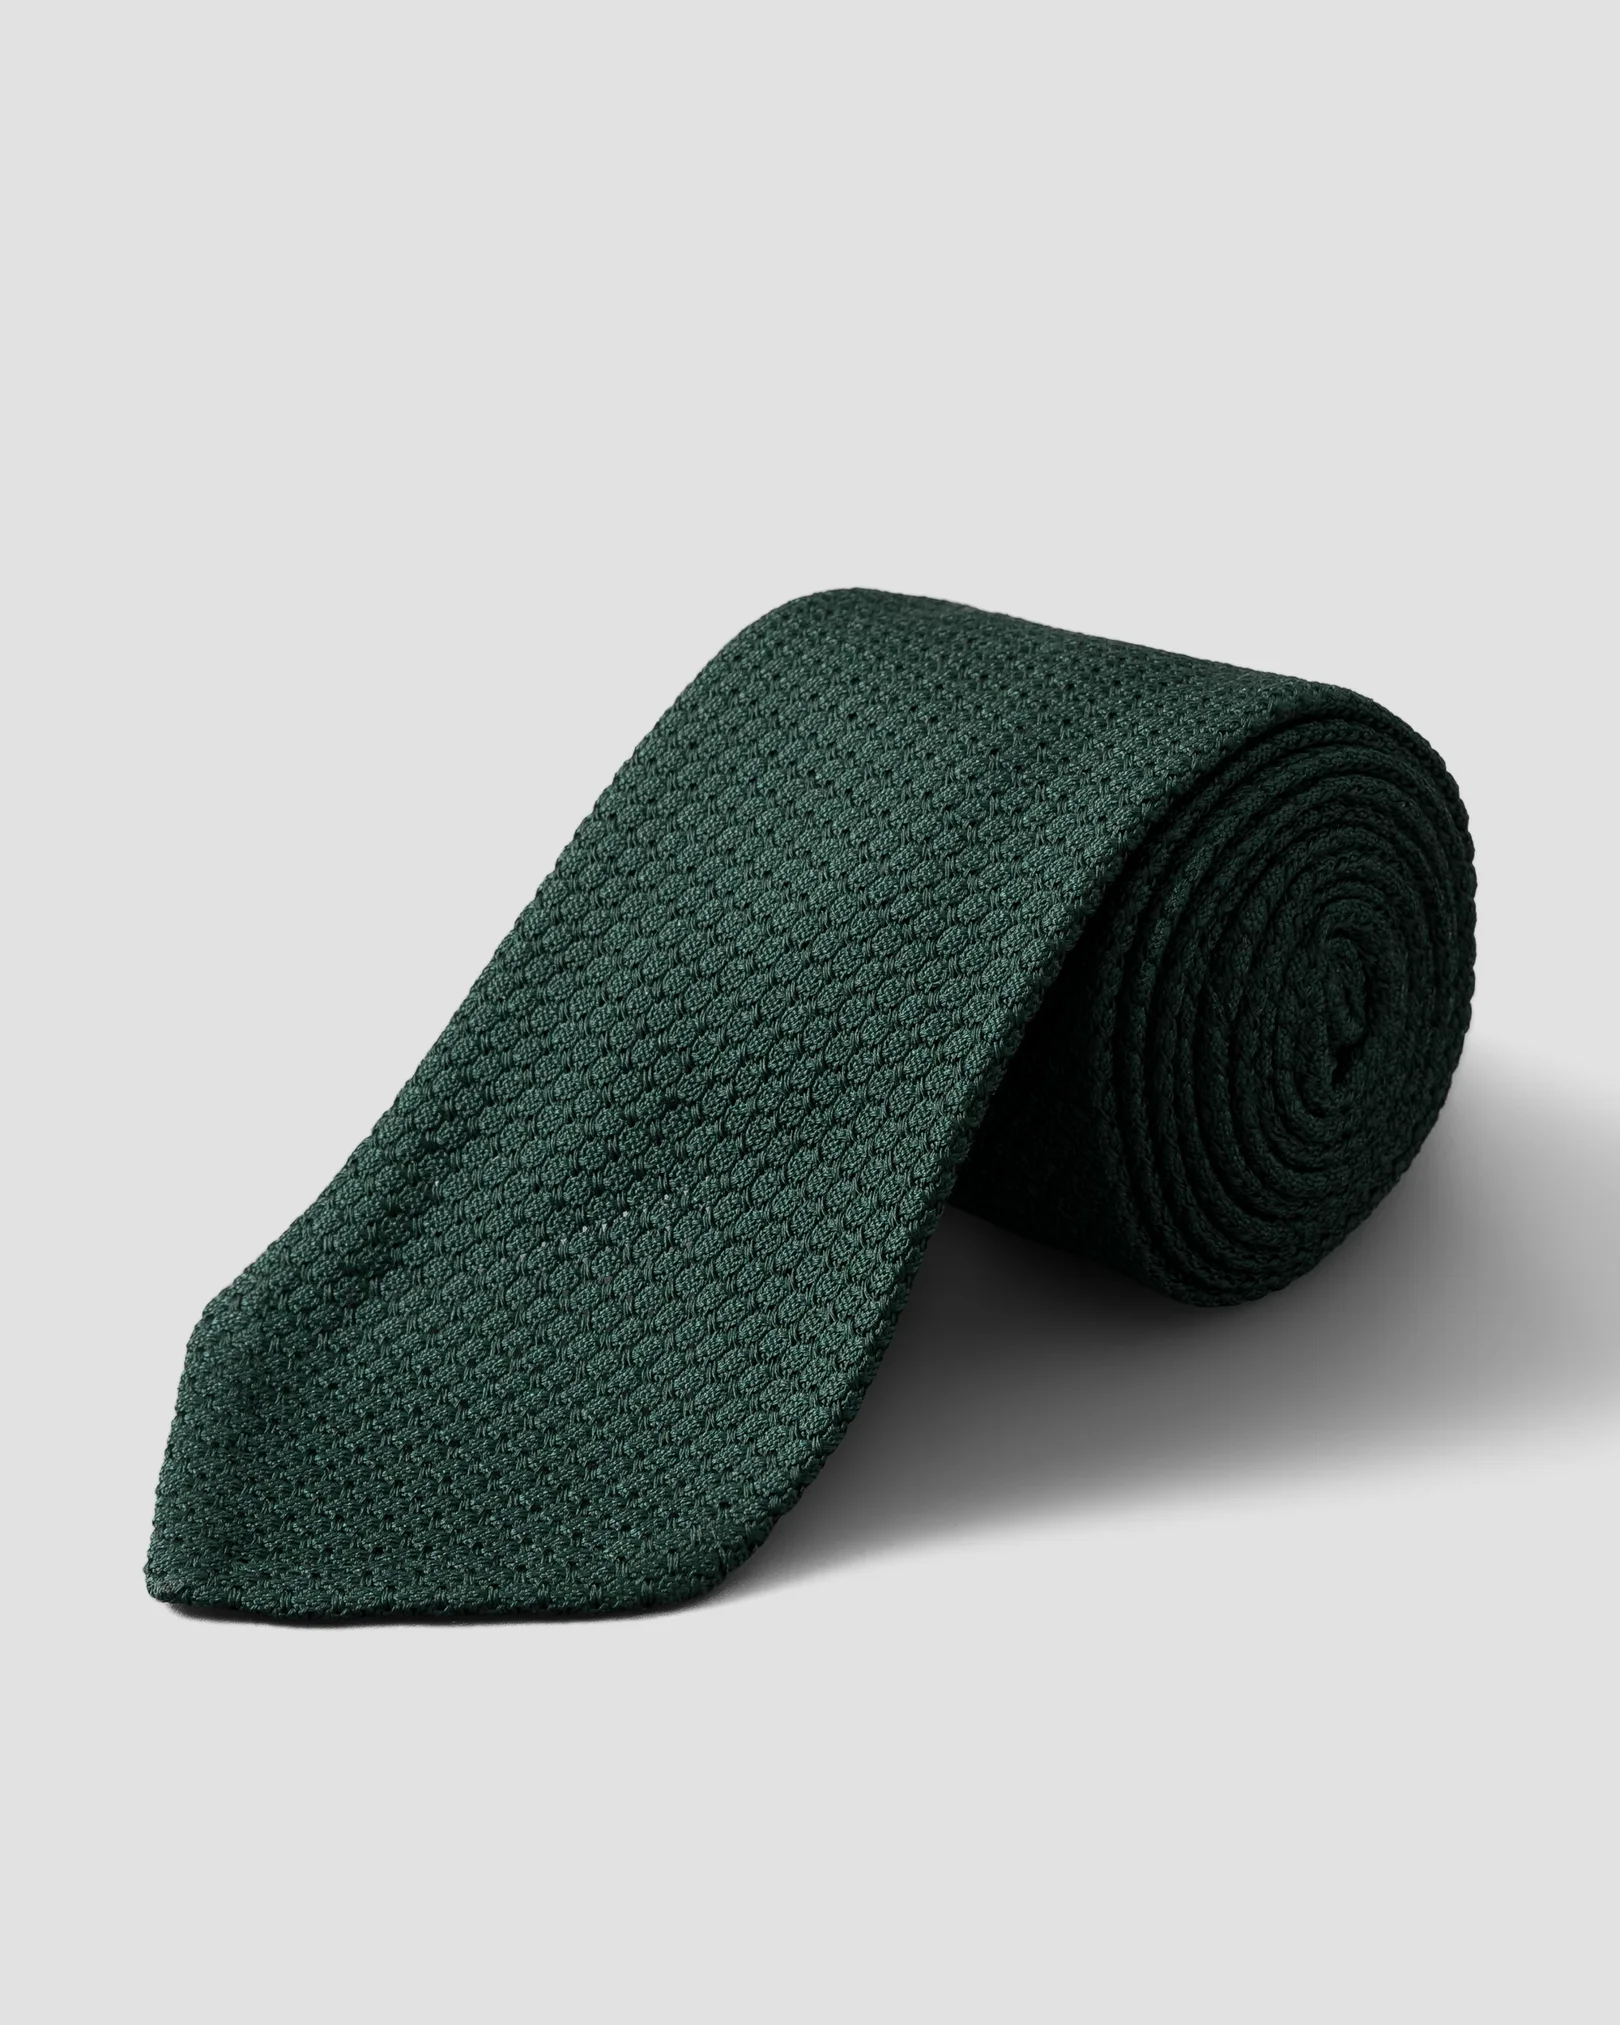 Eton - green grenadine tie